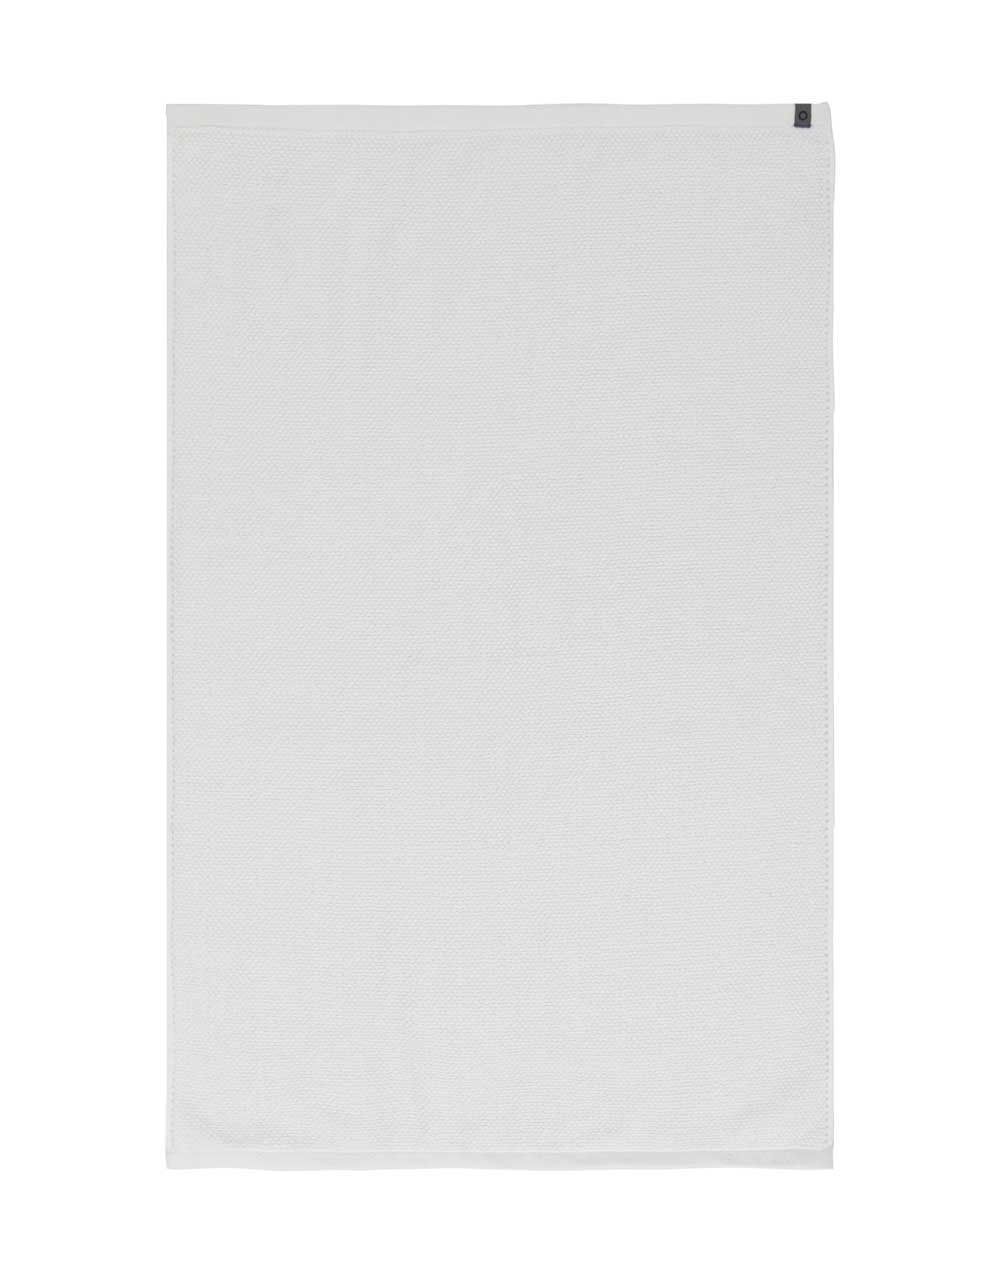 Essenza Koupací ručník, velký, 100% bavlna, bilá barva - EMAKO.CZ s.r.o.